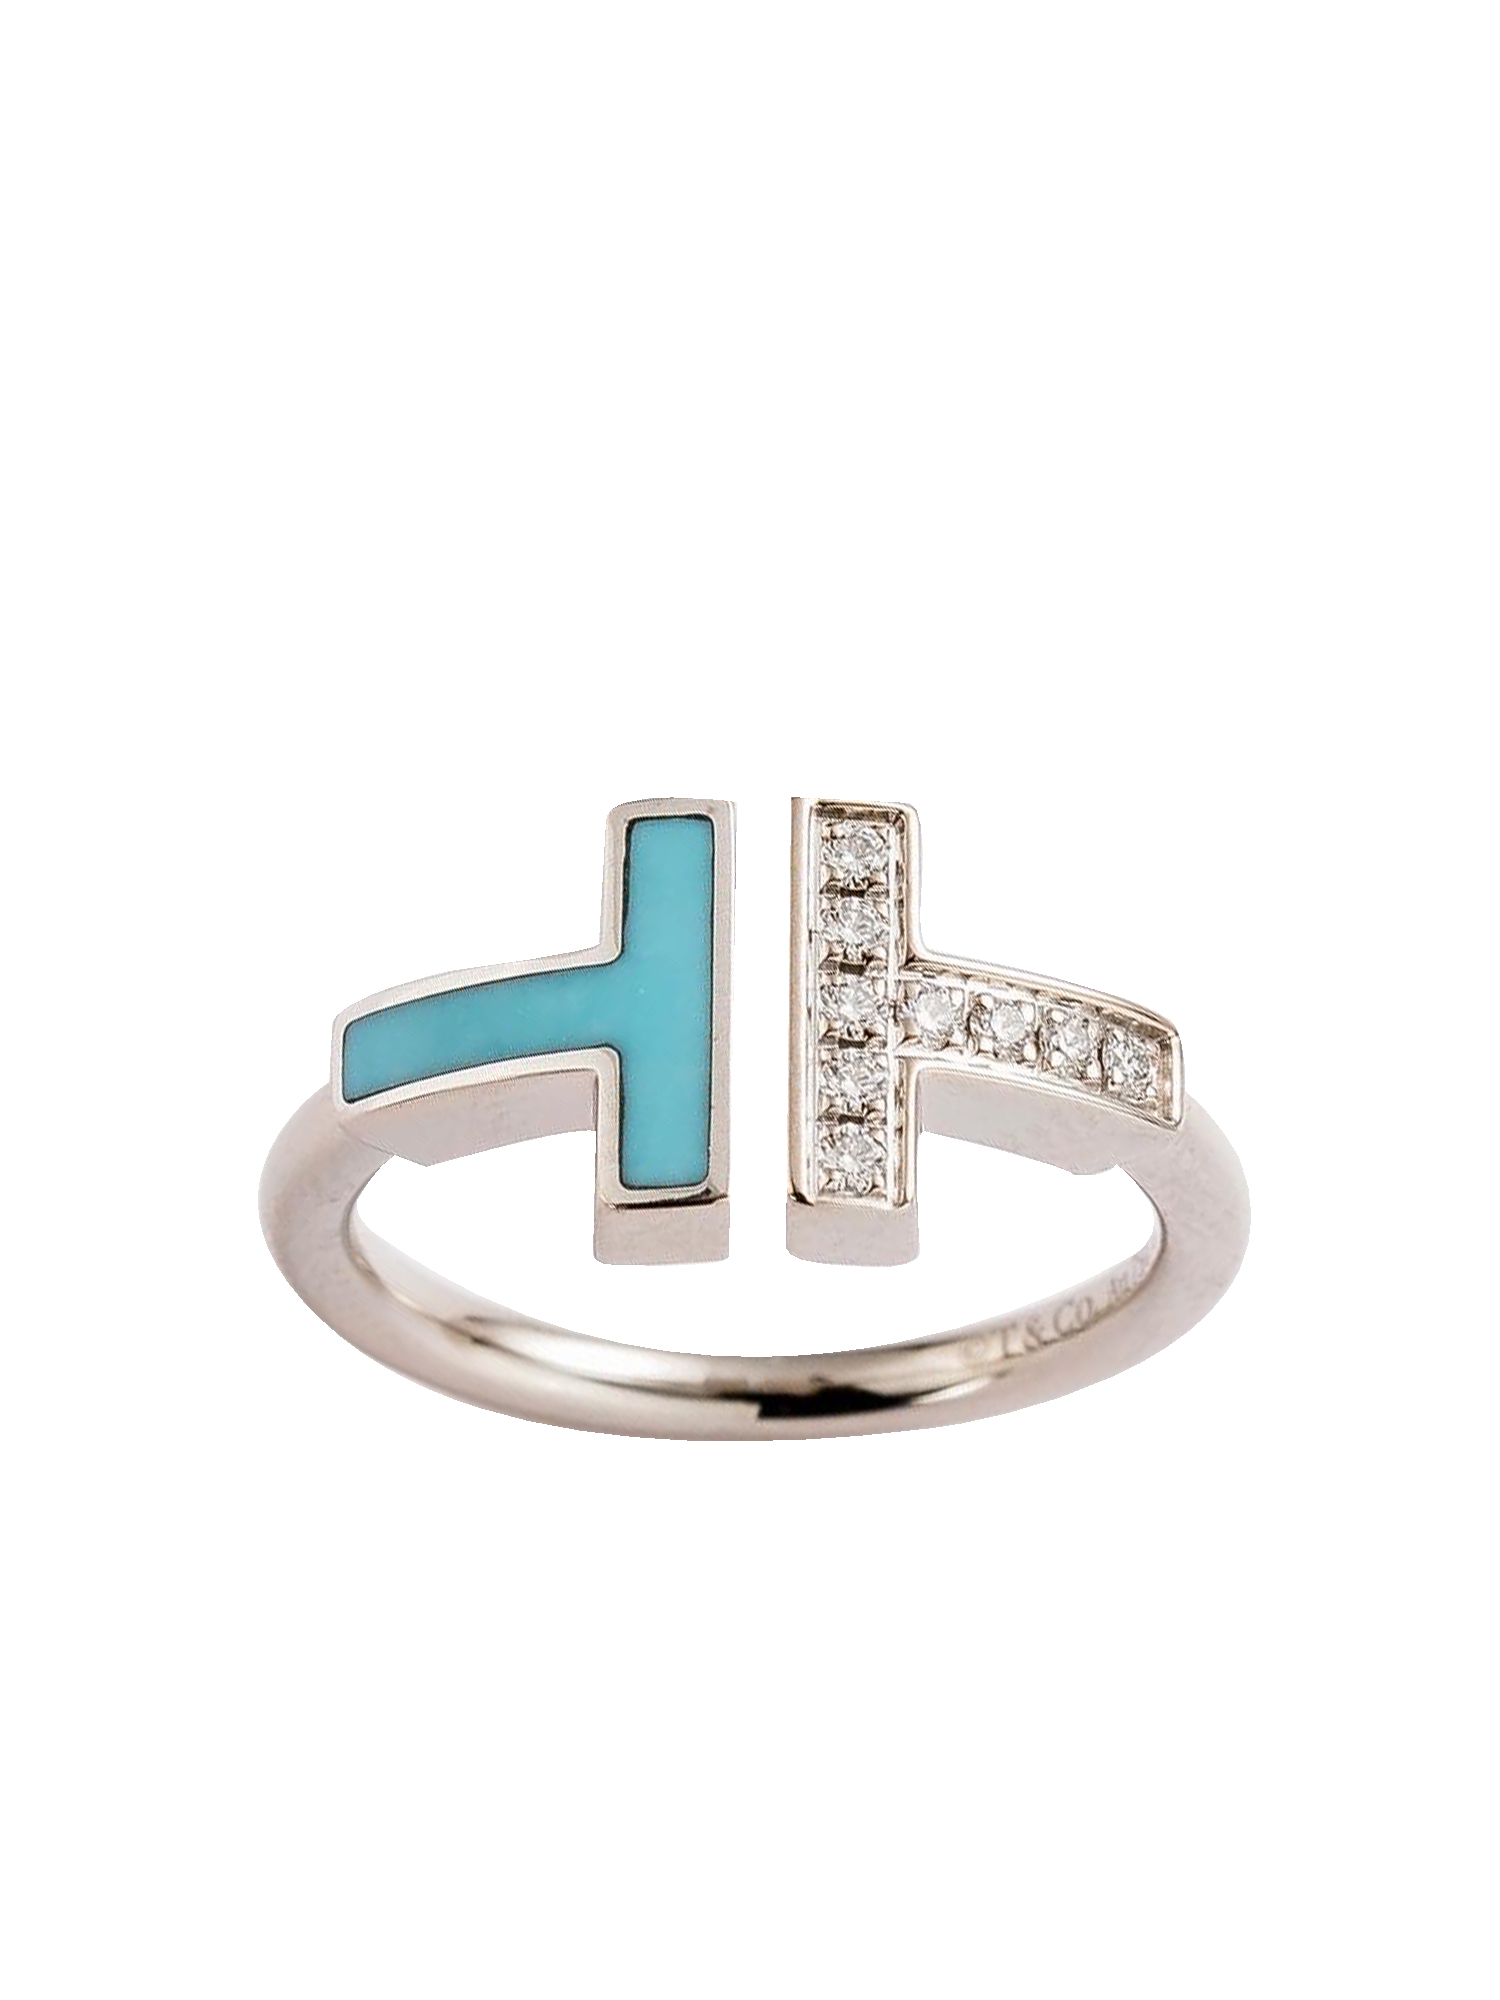 https://image.katexoxo.com/uploads/images/kxo_202210271416017uc25. T Diamond and Turquoise Wire Ring in 18k White GoldArtboard 1